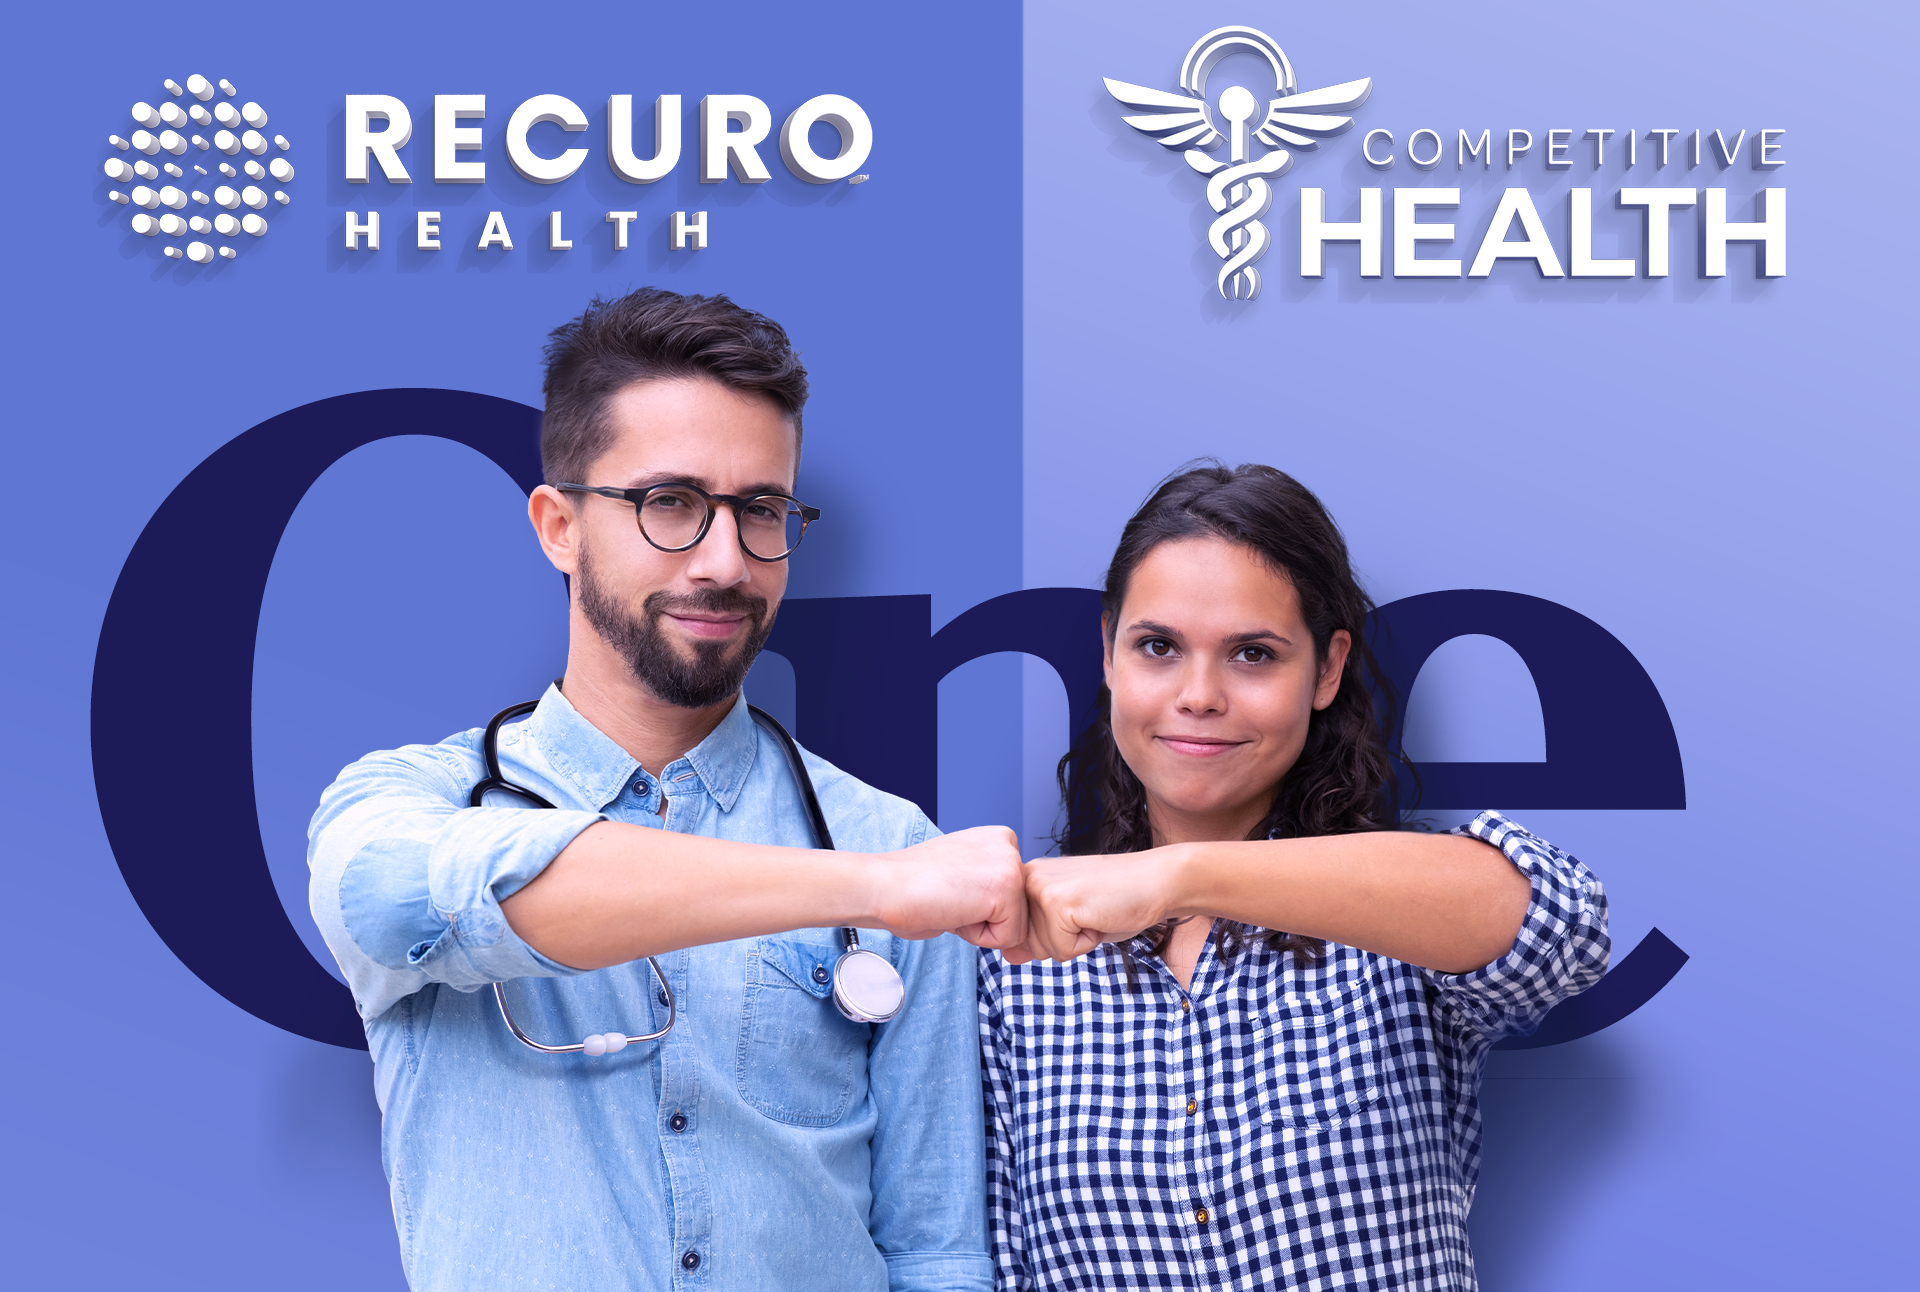 Recuro Health Acquires Competitive Health